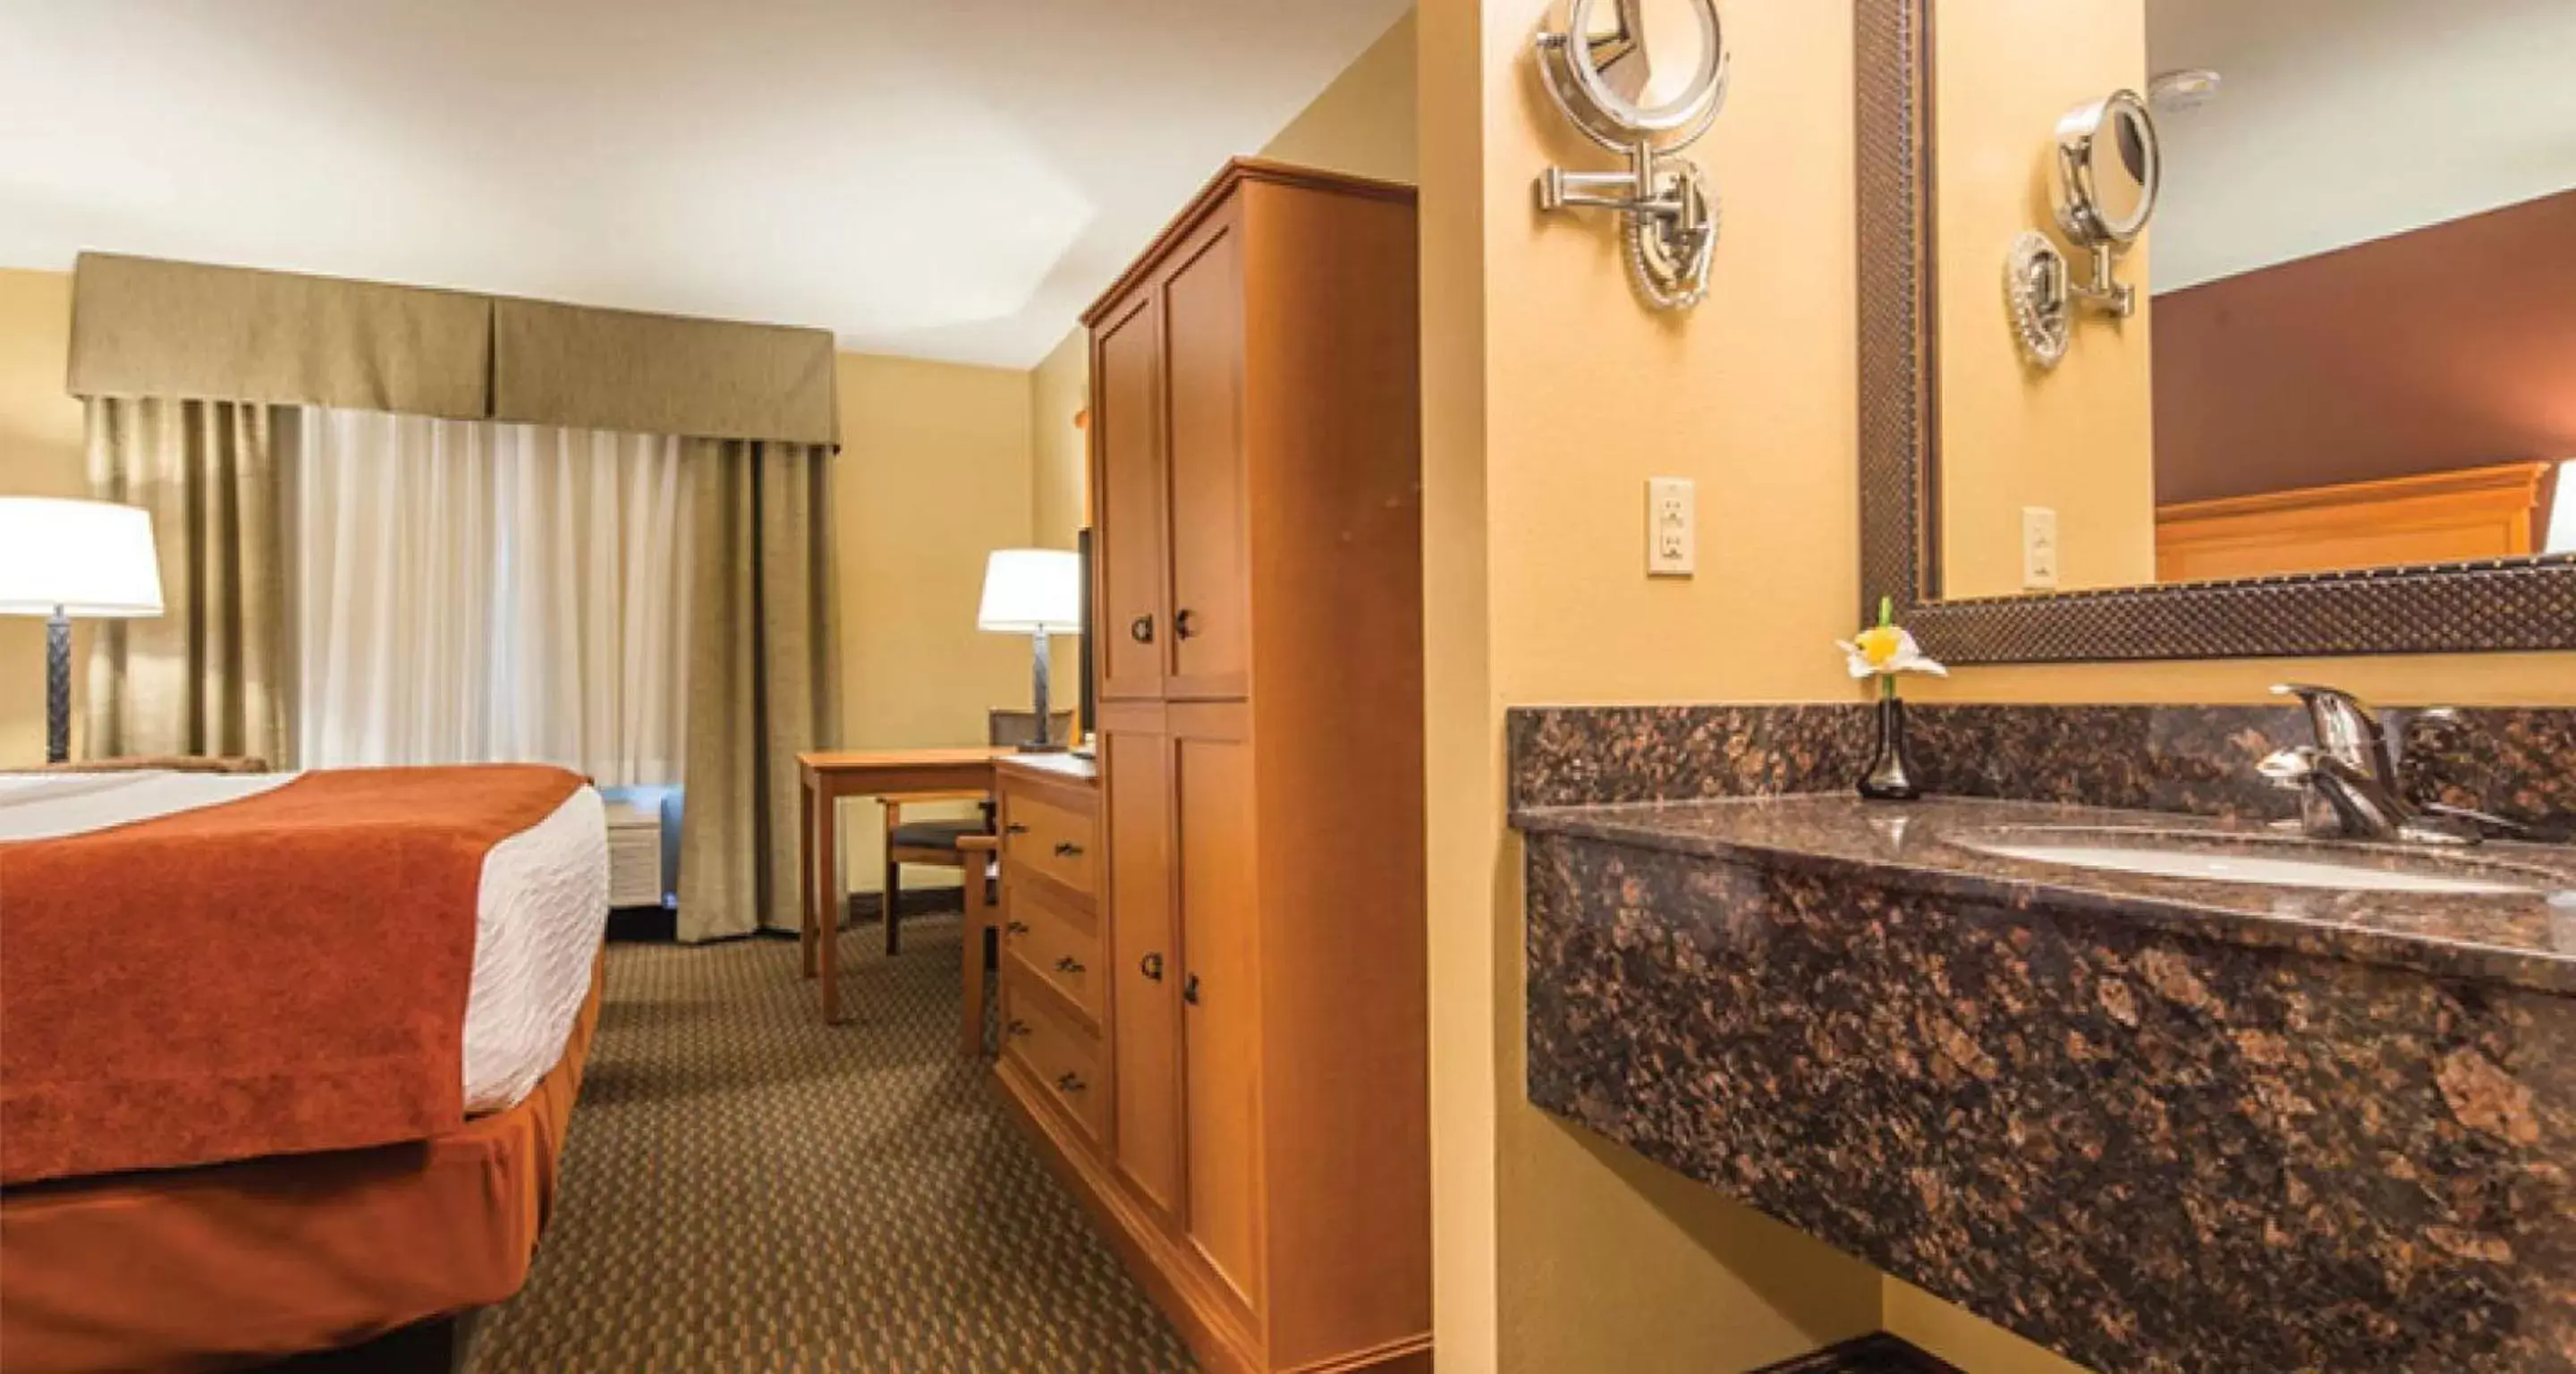 Photo of the whole room, Bathroom in Best Western Plus Deer Park Hotel and Suites